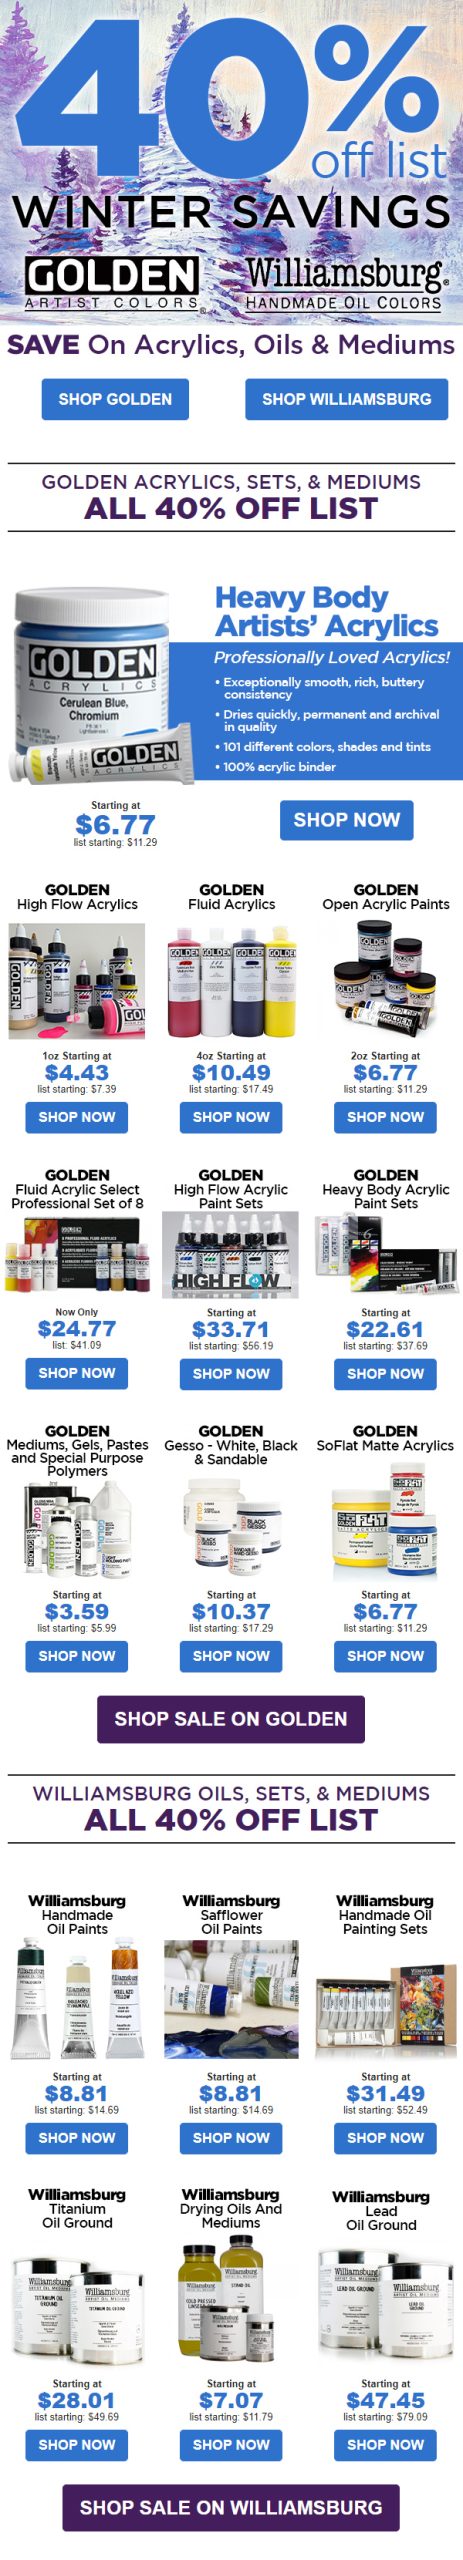 Golden winter sale email Jan 2023